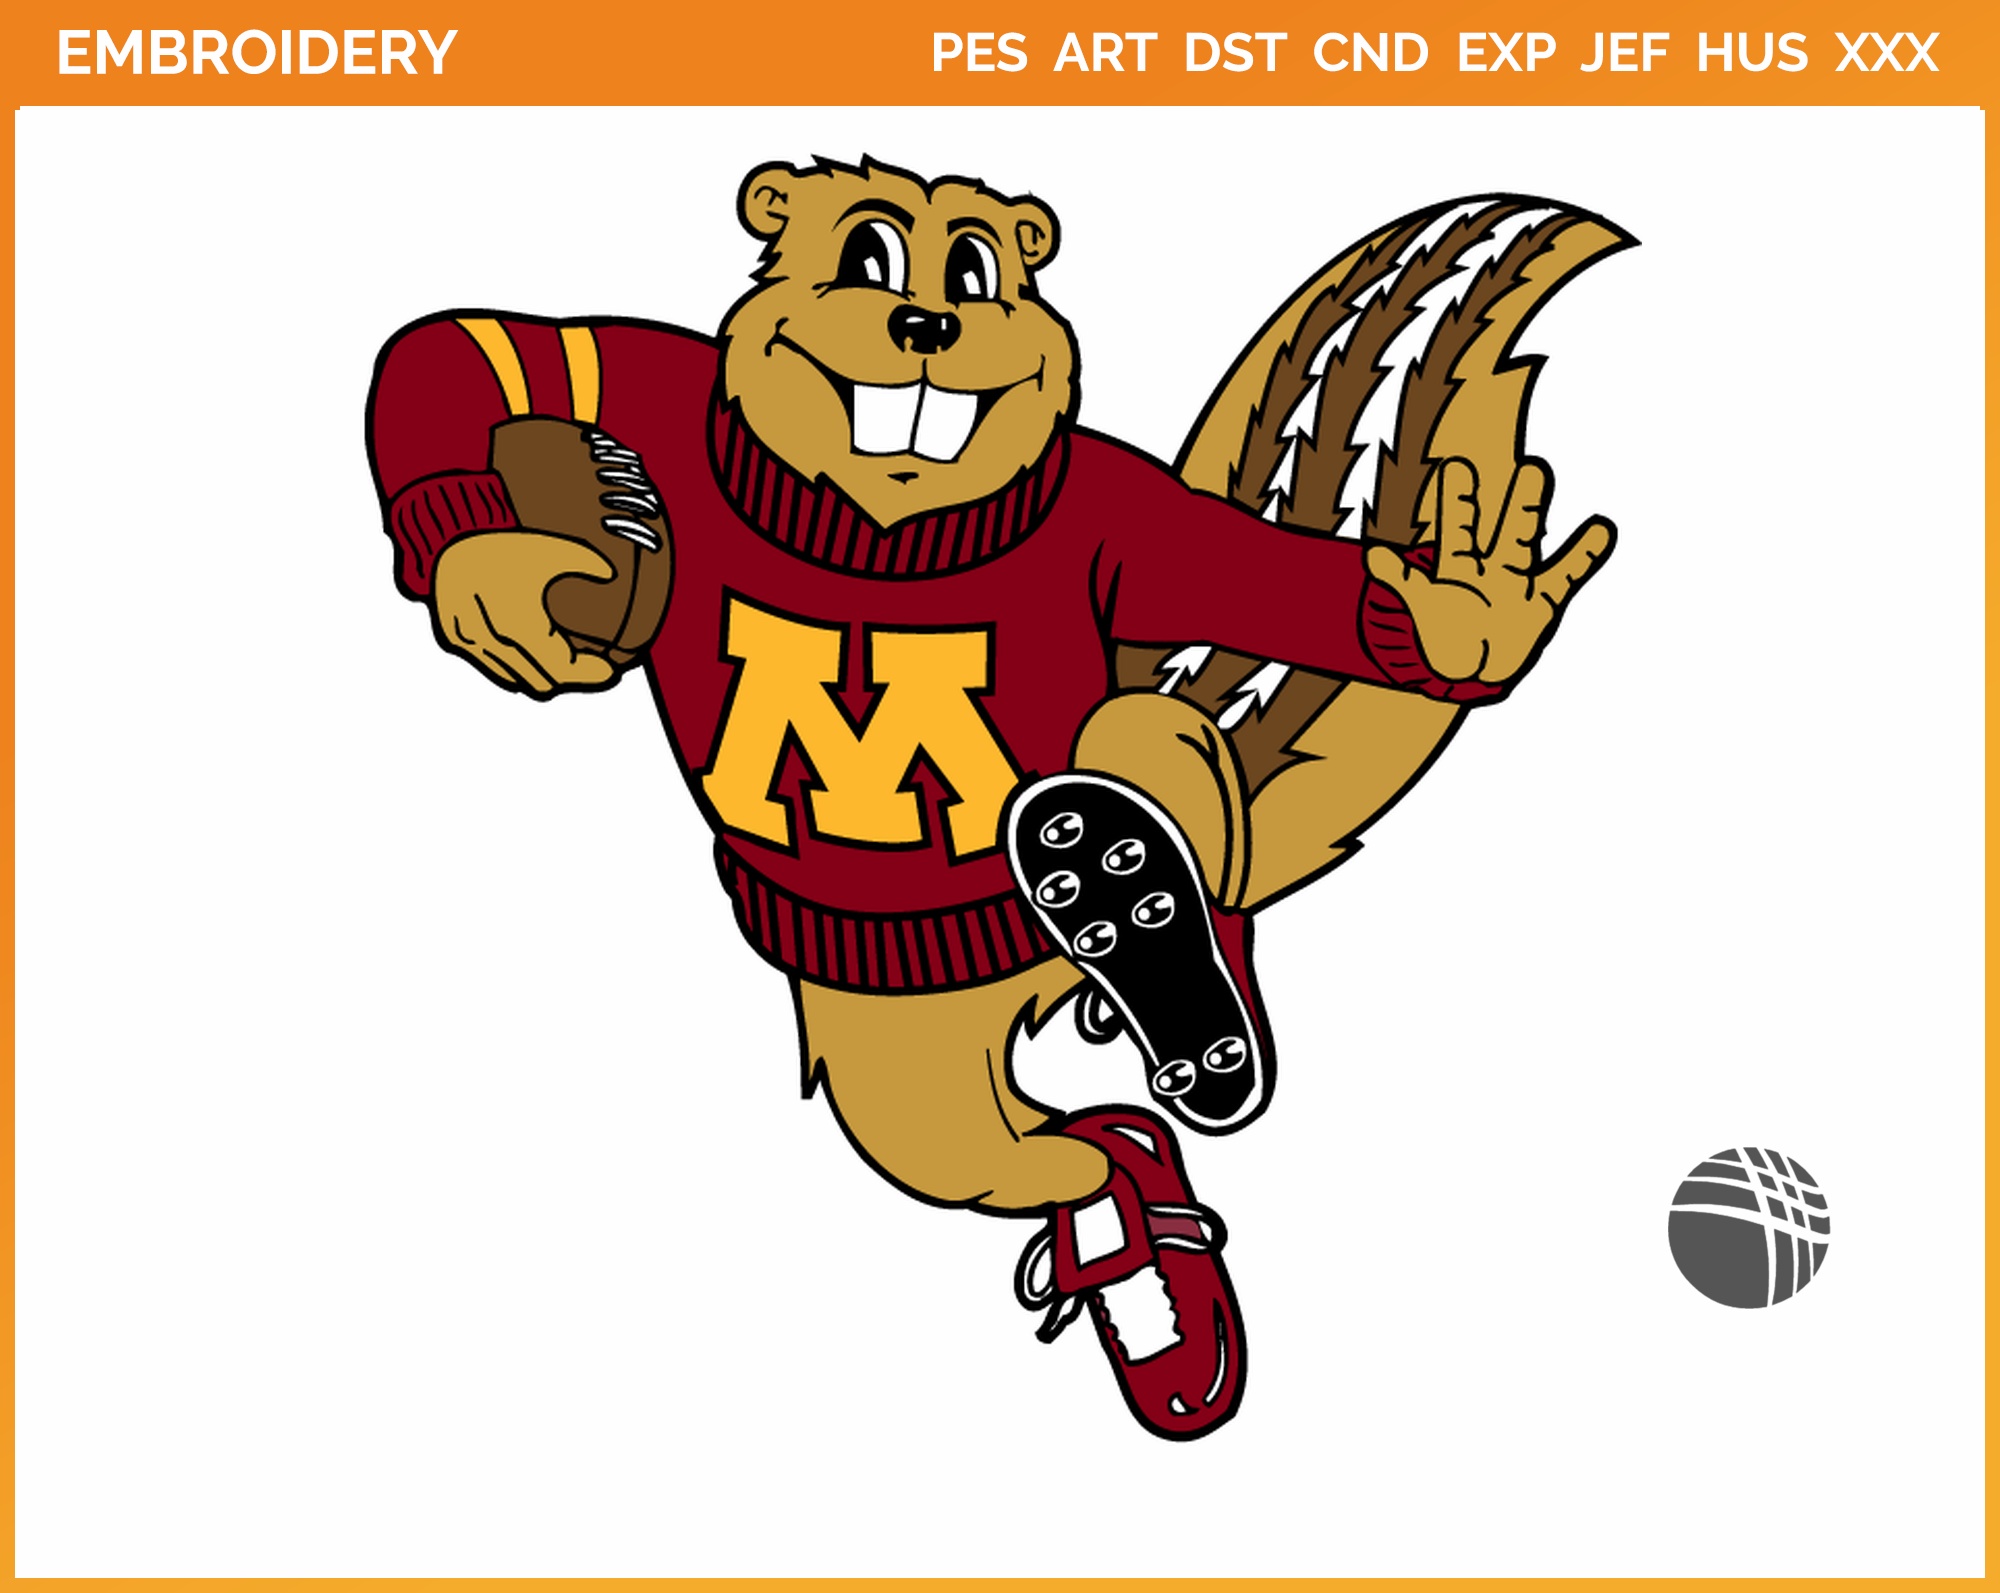 college football team mascot logos